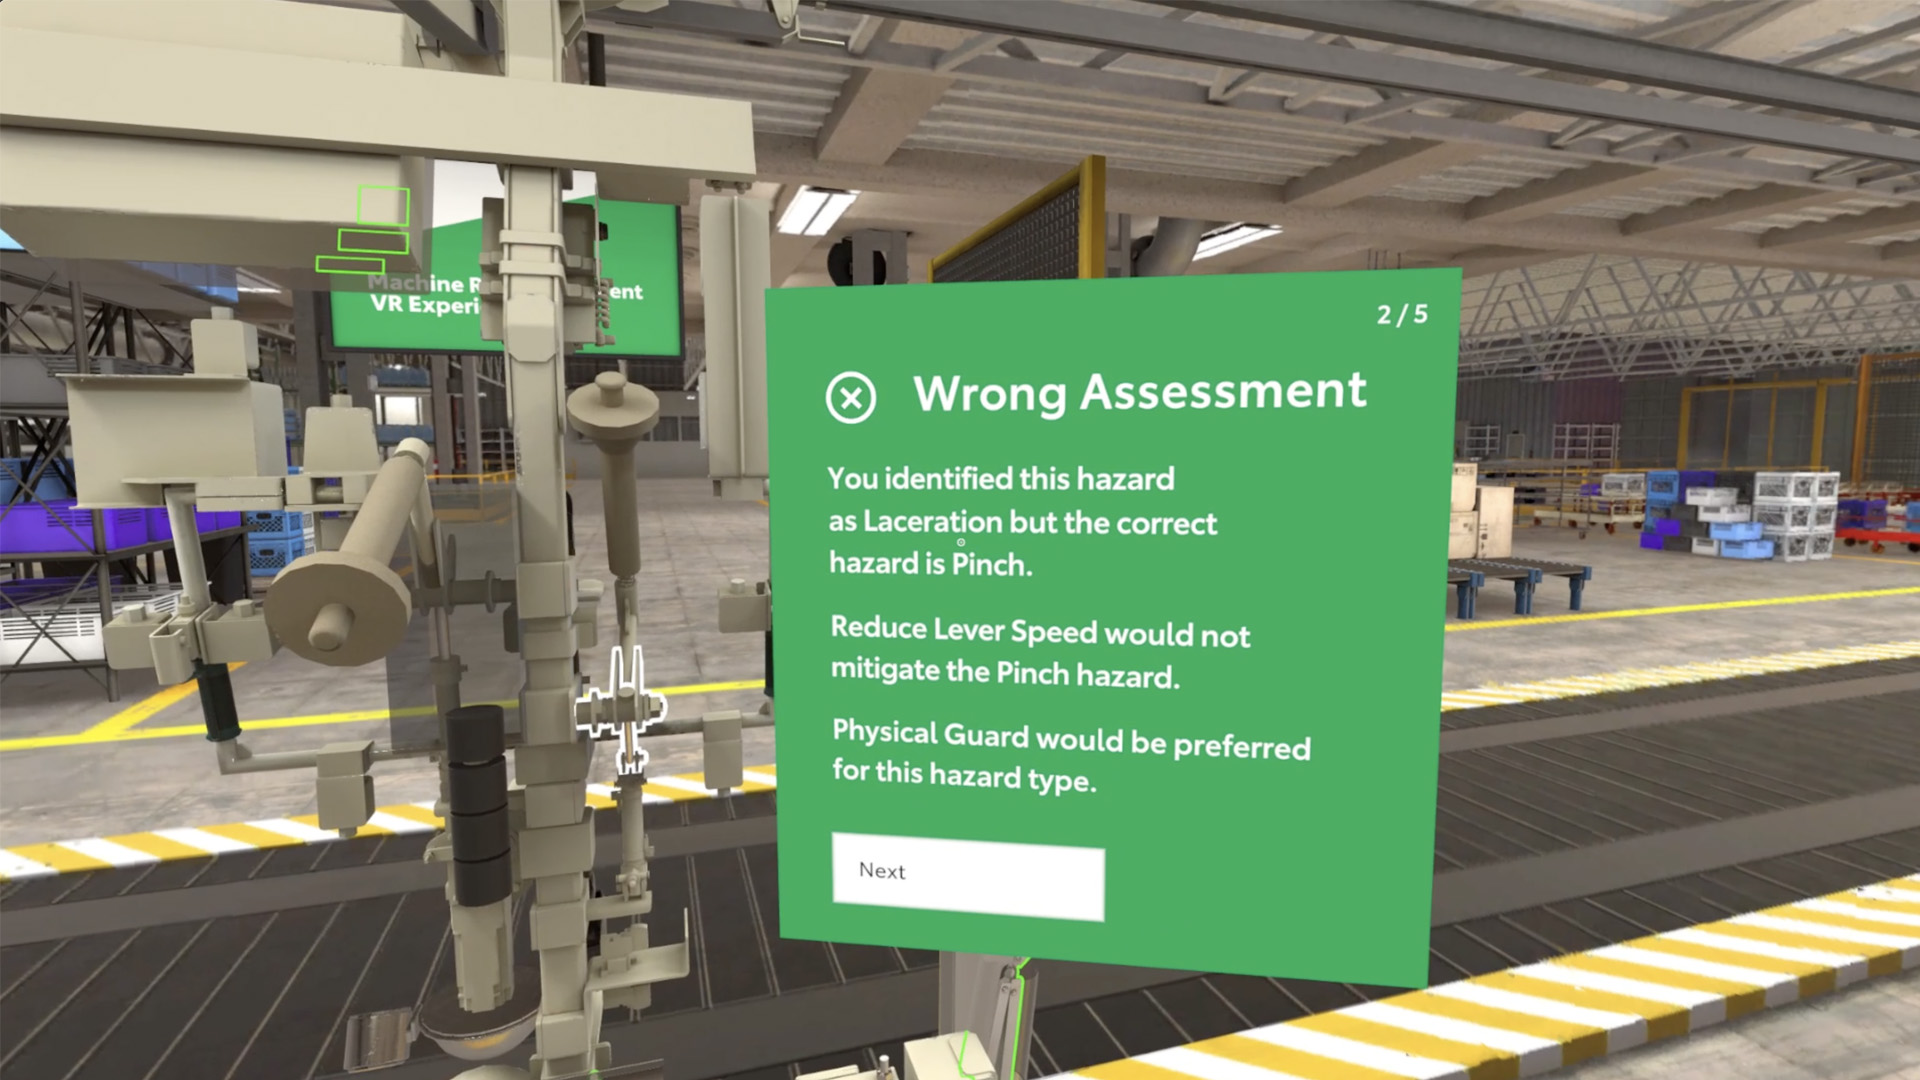 Machine Risk Assessment 